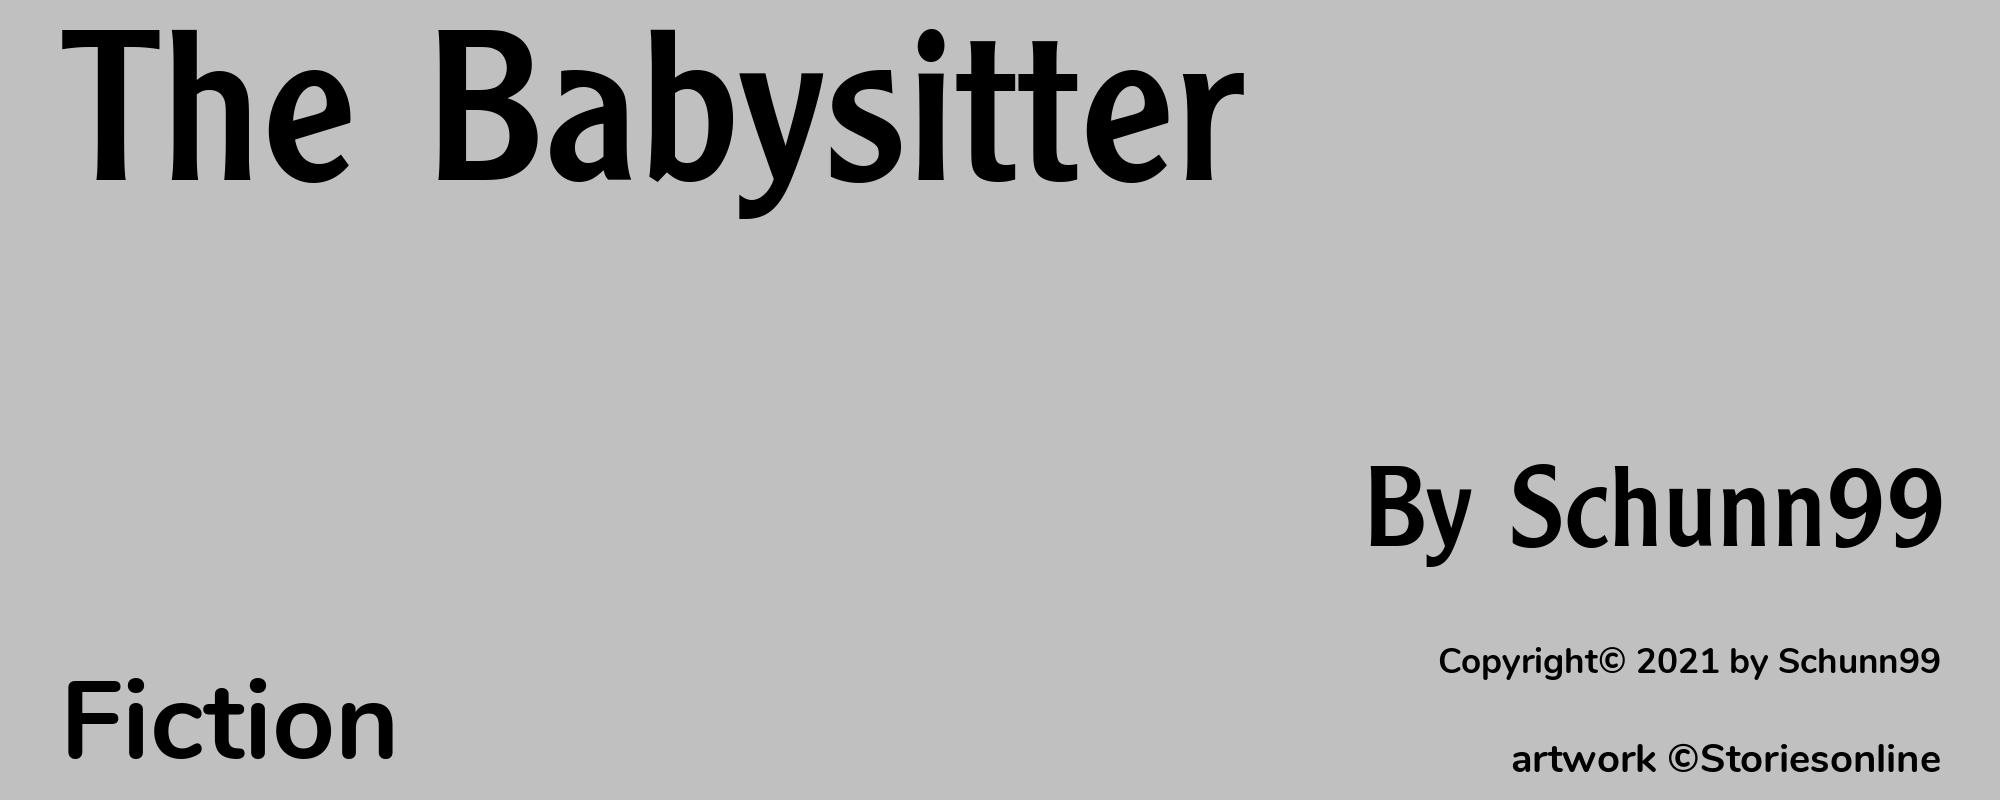 The Babysitter - Cover